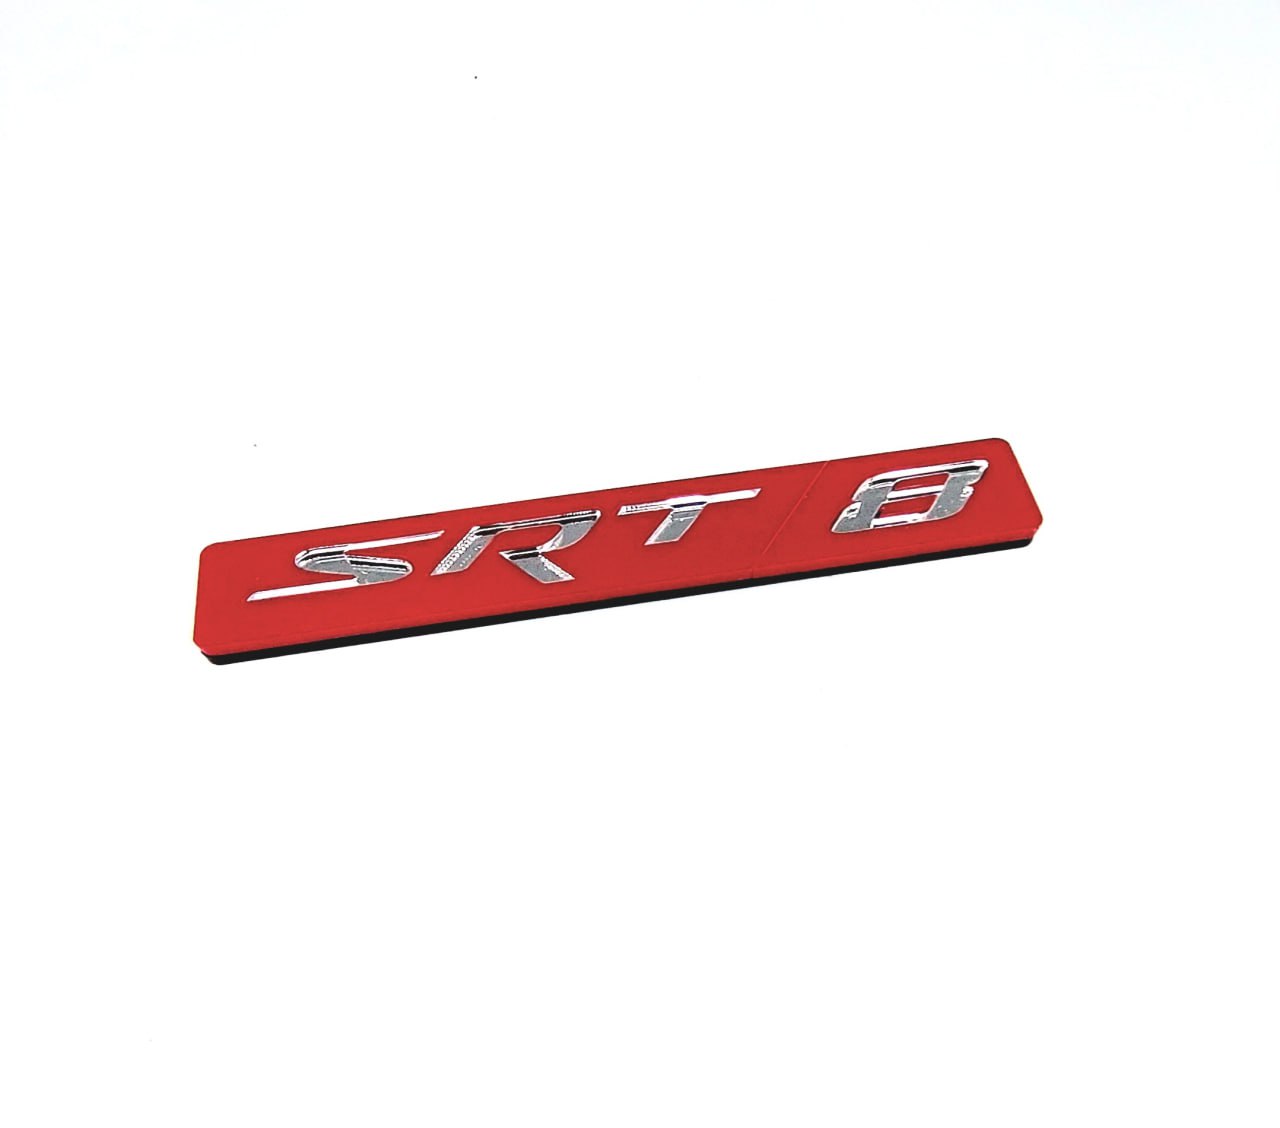 Chrysler tailgate trunk rear emblem with SRT8 logo (Type 4)